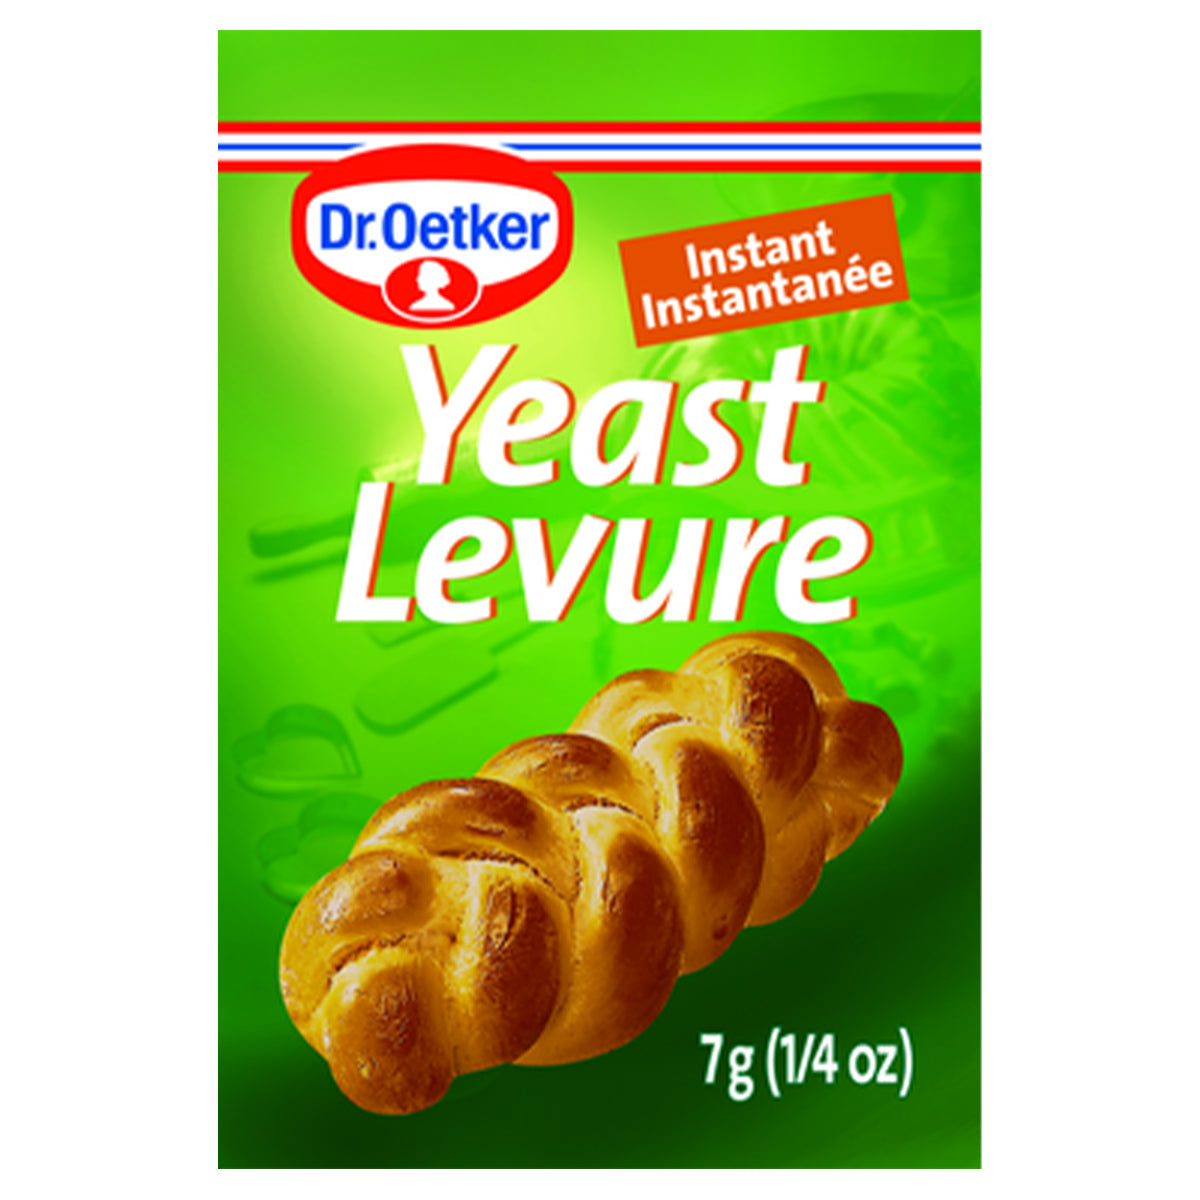 Dr. Oetker - Dry Yeast - 7g brand name is Dr oetker yeast levure.